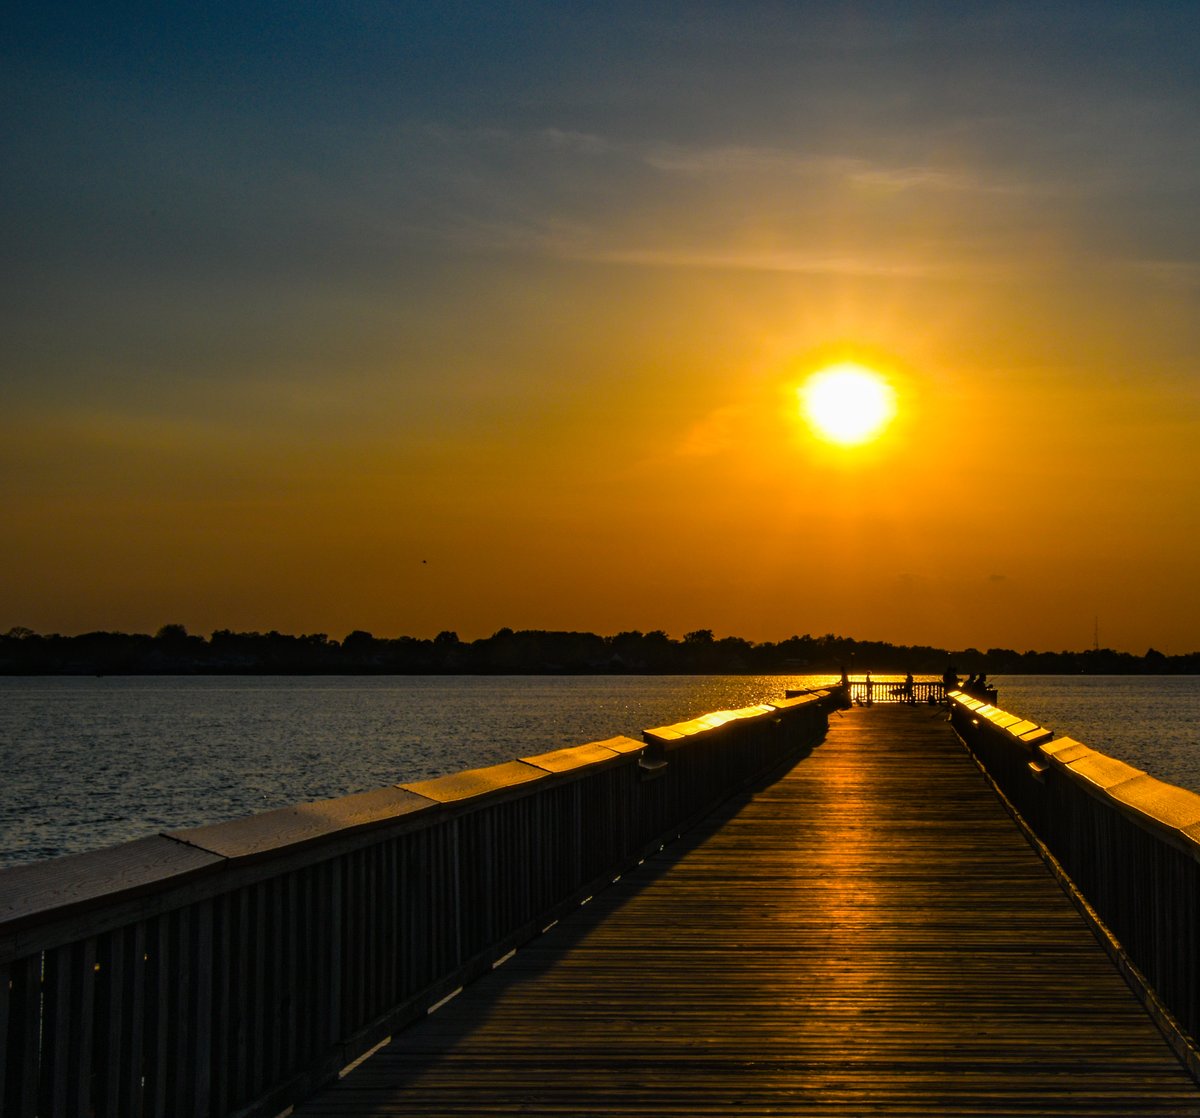 Setting Sun at the End of the Bill Burton Fishing Pier - Fort Smallwood Park

#FortSmallwoodPark #AnneArundel #Maryland #ChesapeakeBay